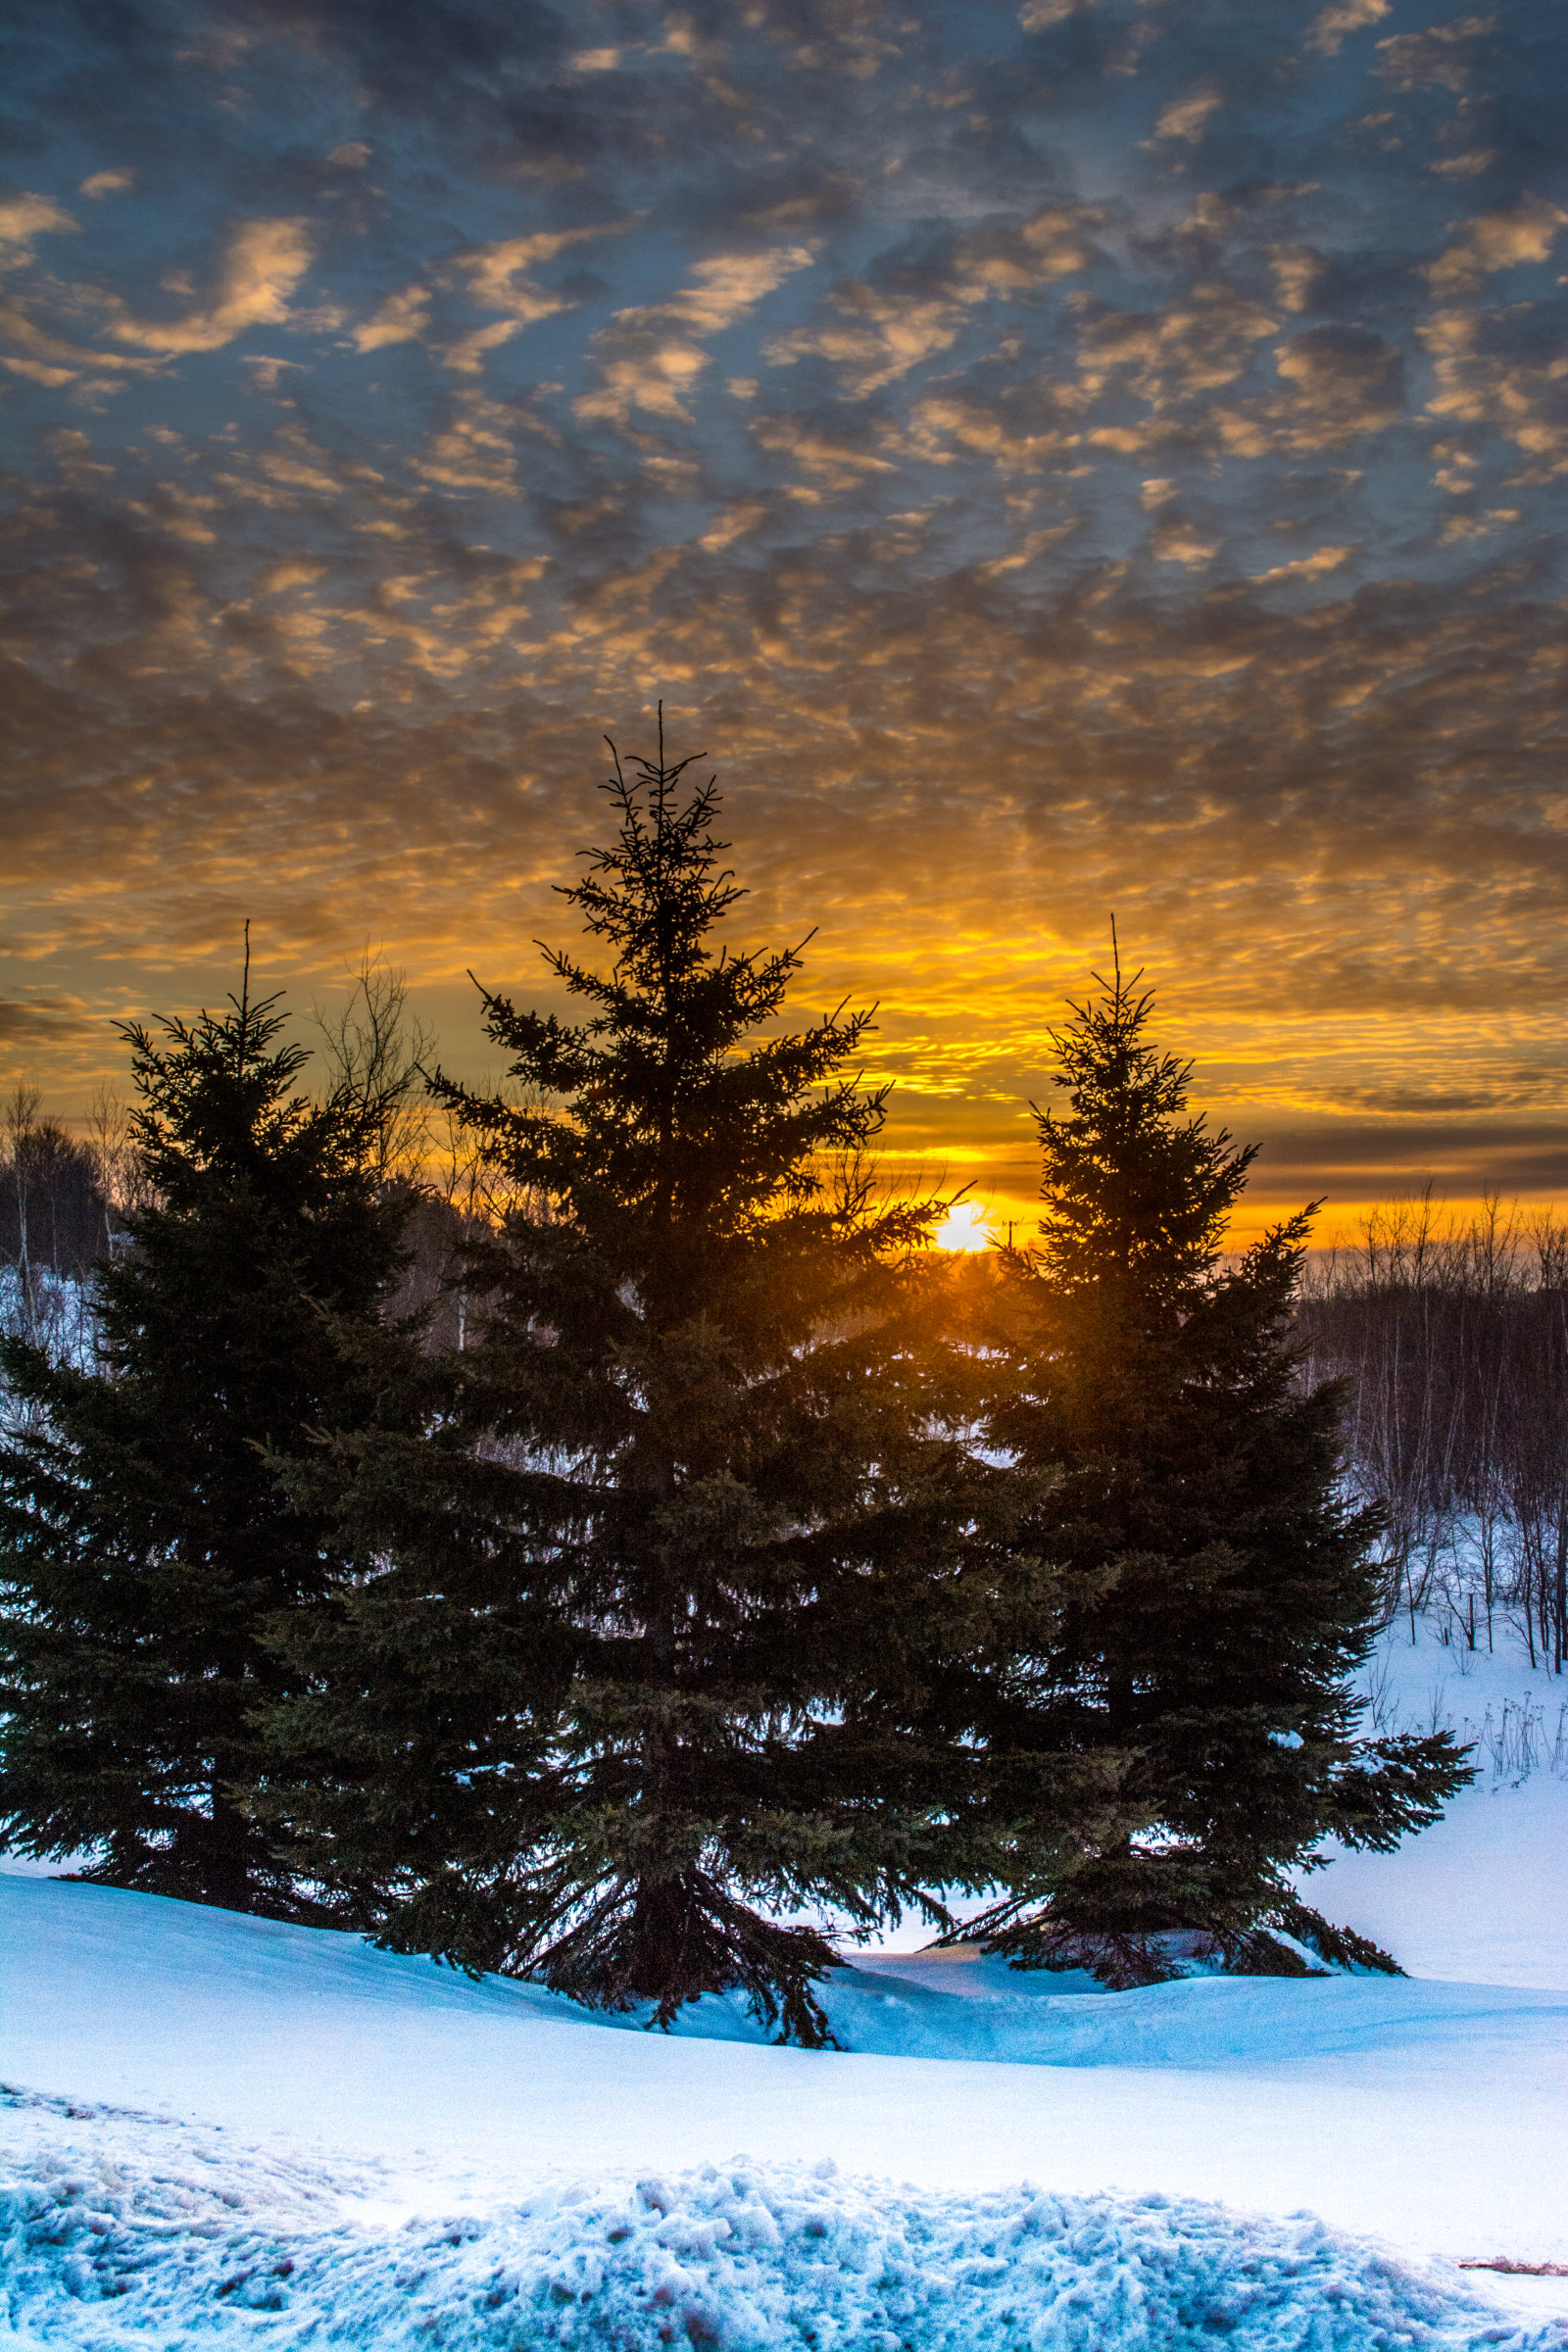 1920x1080 Background landscape, winter, nature, trees, sunset, snow, fir trees